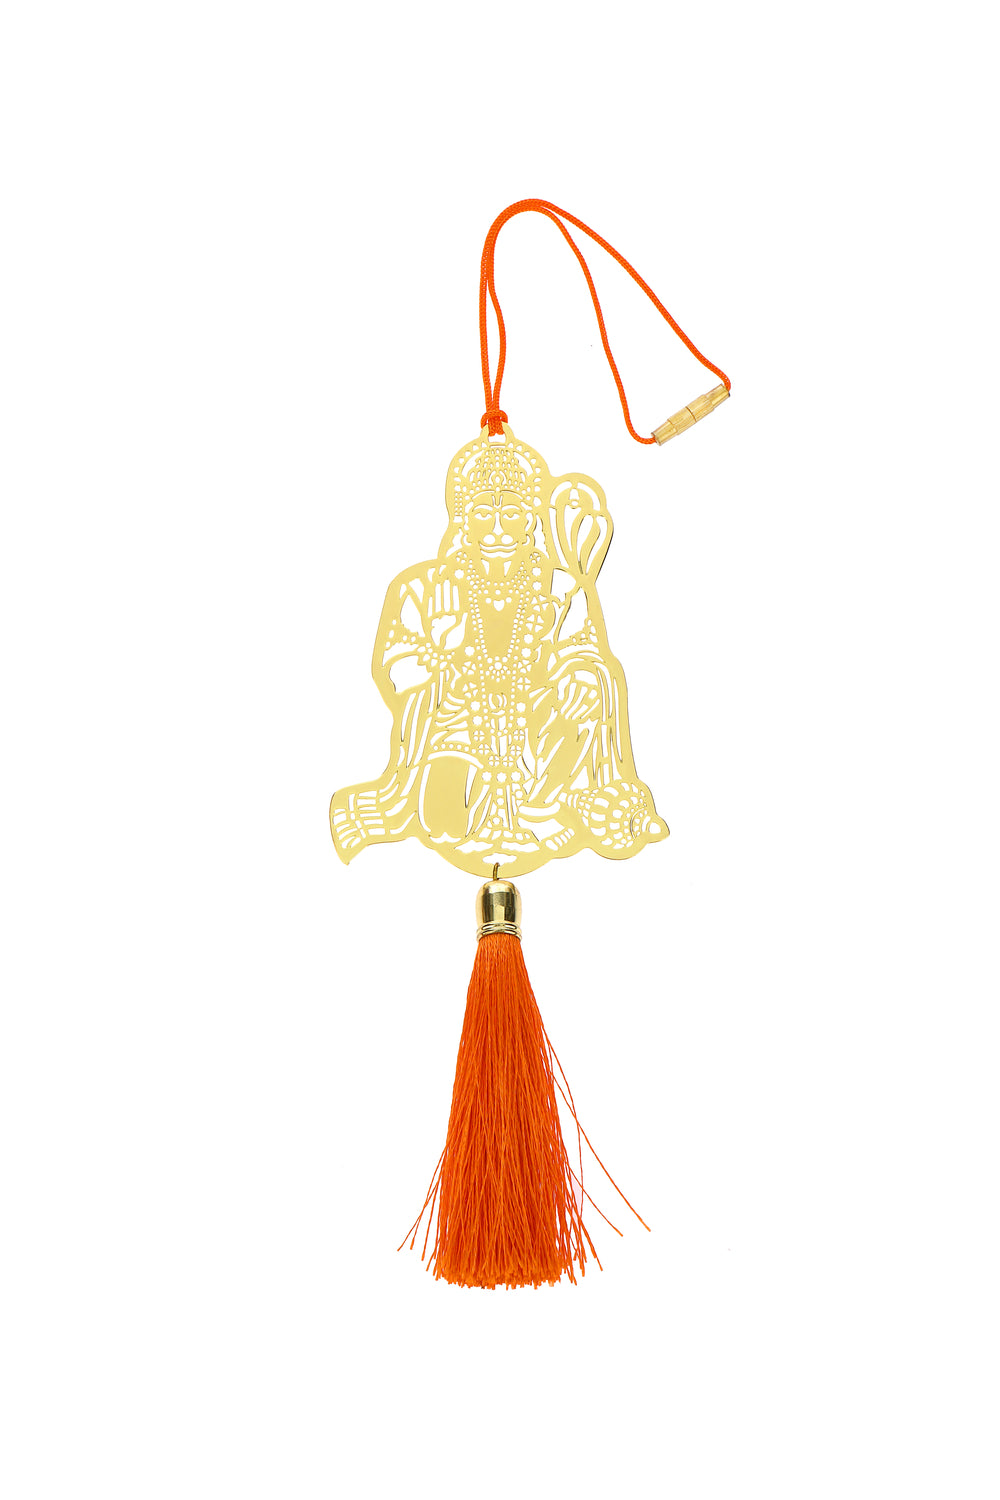 Shrinathji Hanging Accessories for Car rear view mirror Decor in Brass –  ADORAA